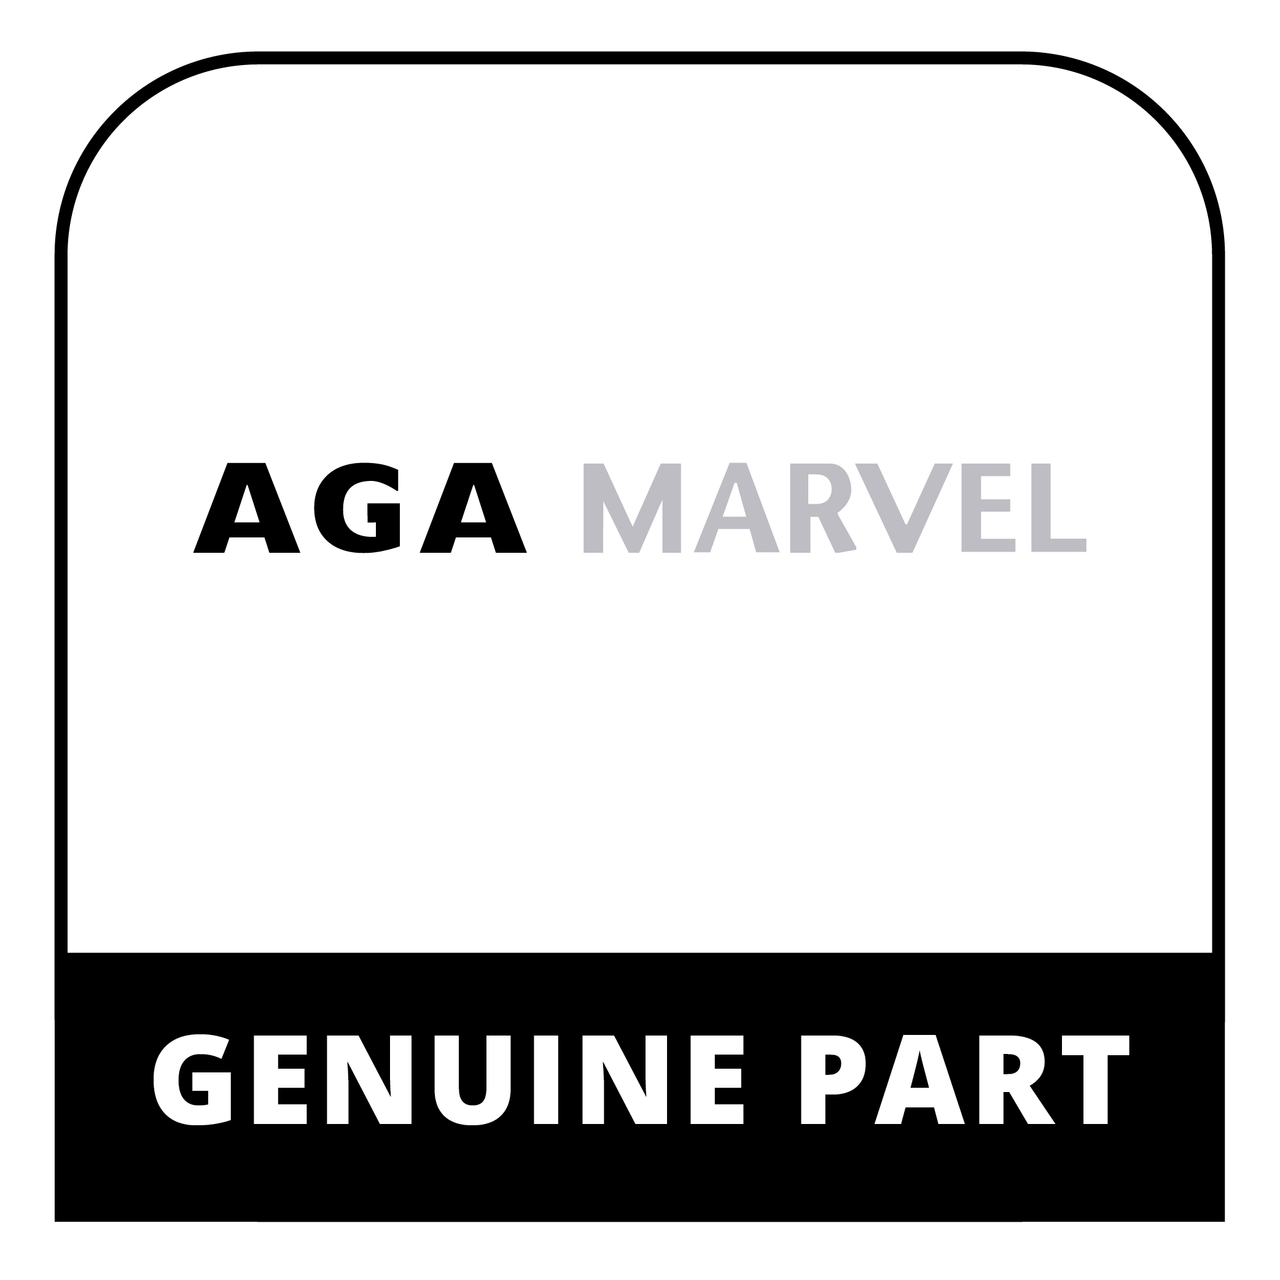 AGA Marvel EGLL512524 - Wiring/Data Label 400G Pf - Genuine AGA Marvel Part